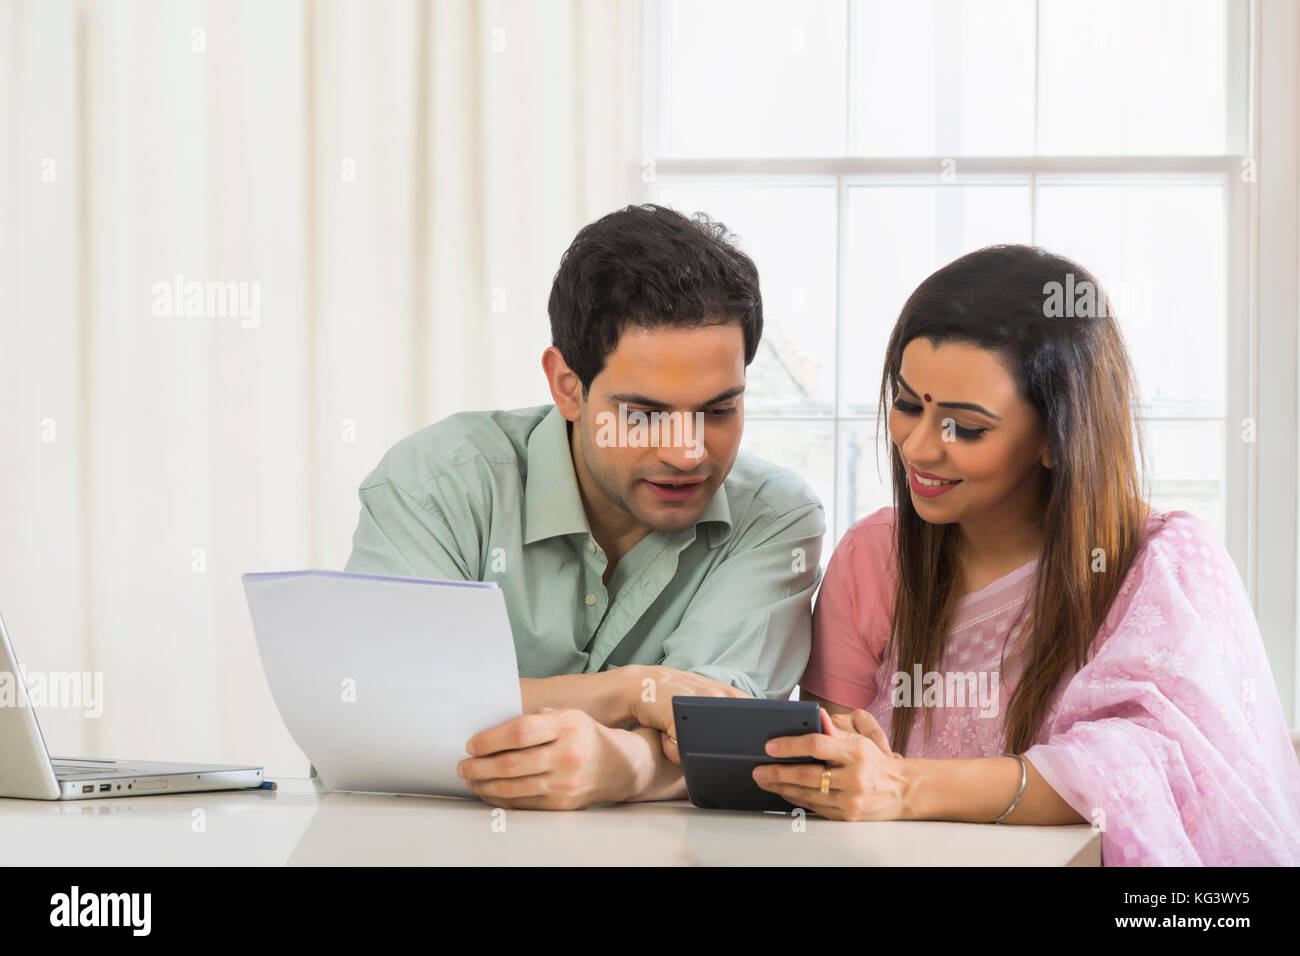 Couple calculating home finances using calculator Stock Photo